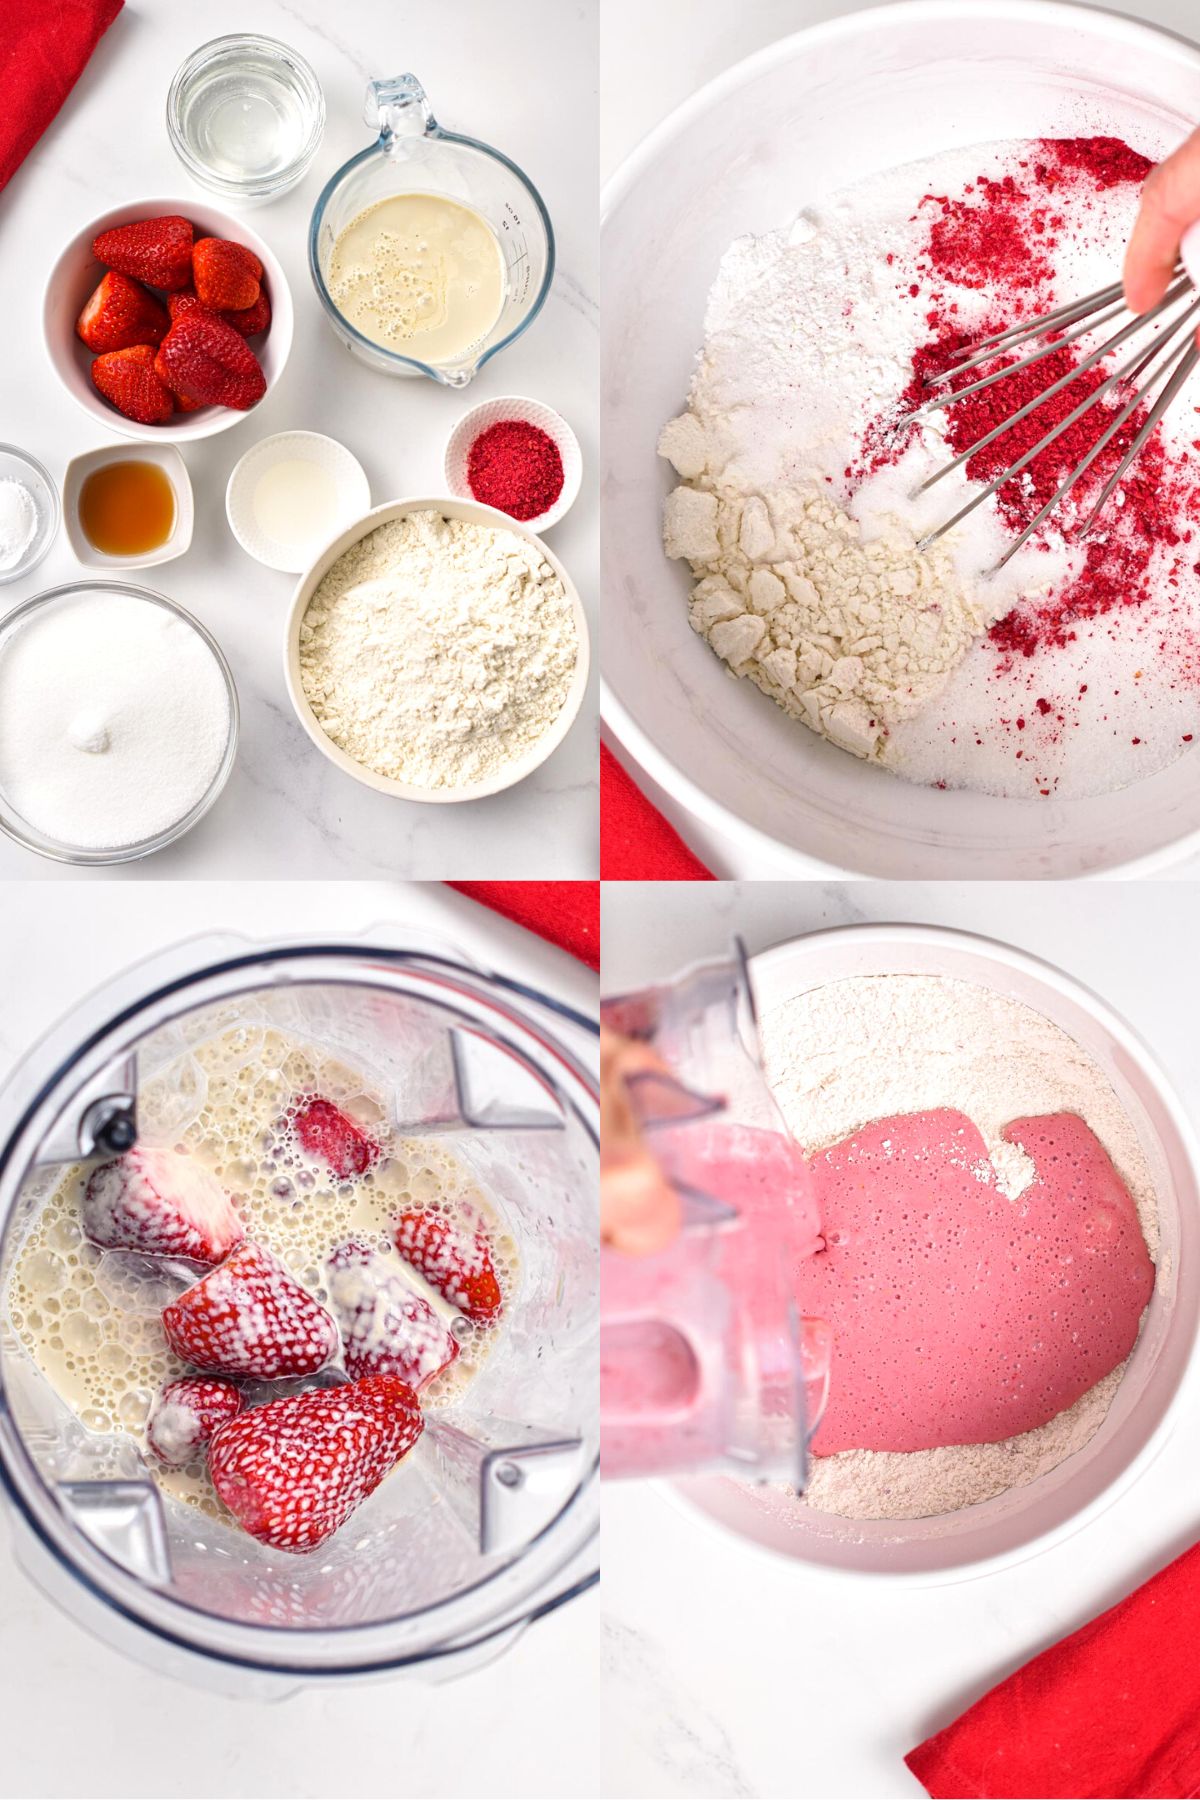 How to make Strawberry Cake